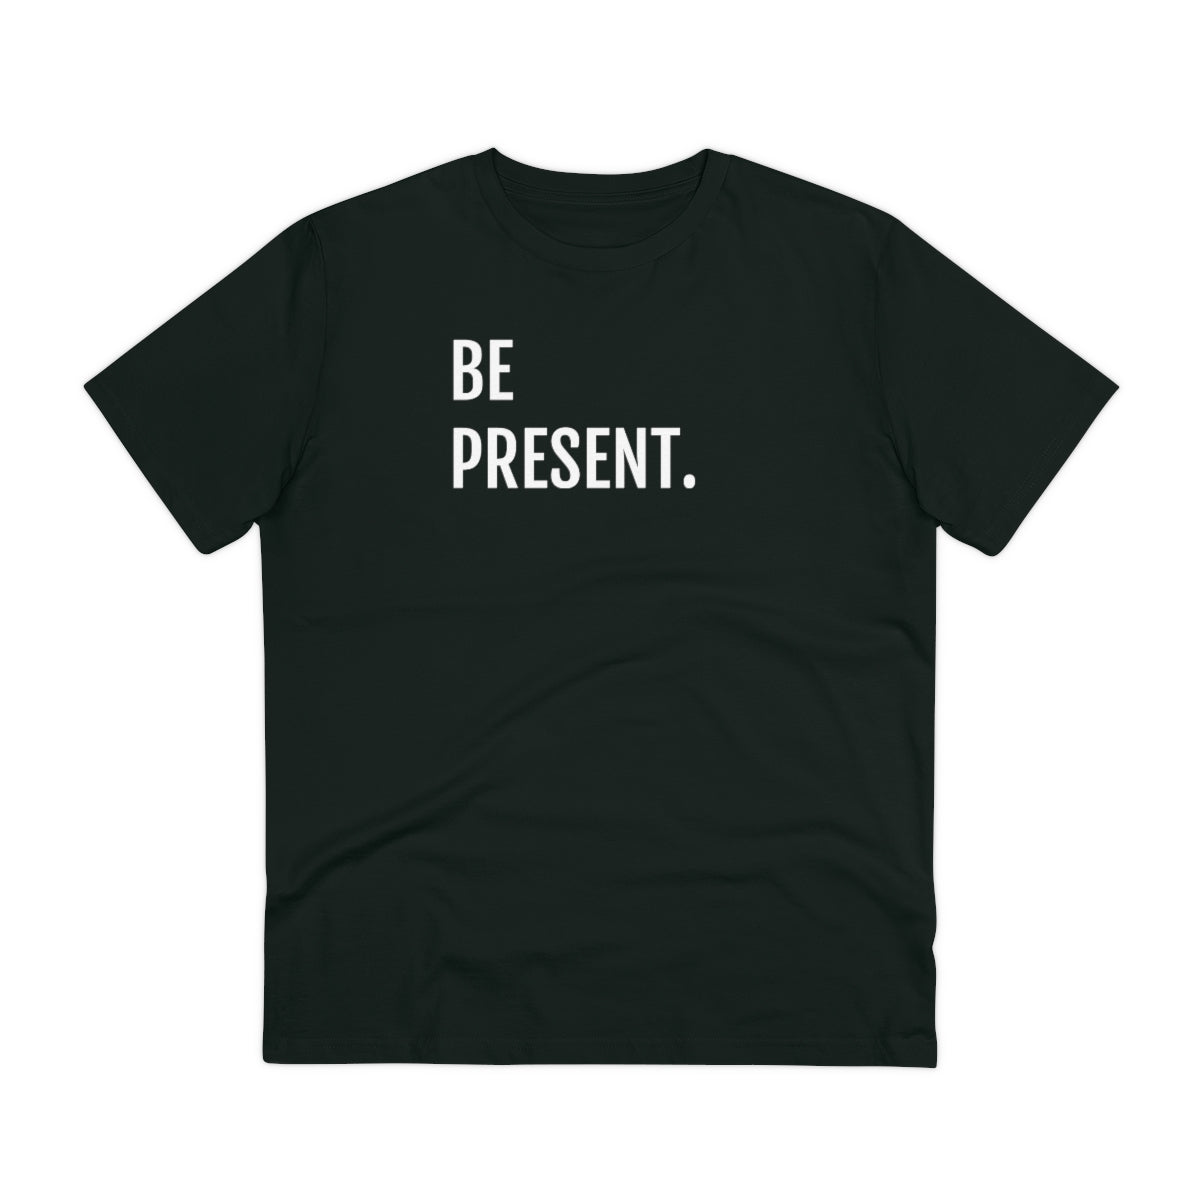 BE PRESENT. - T-shirt